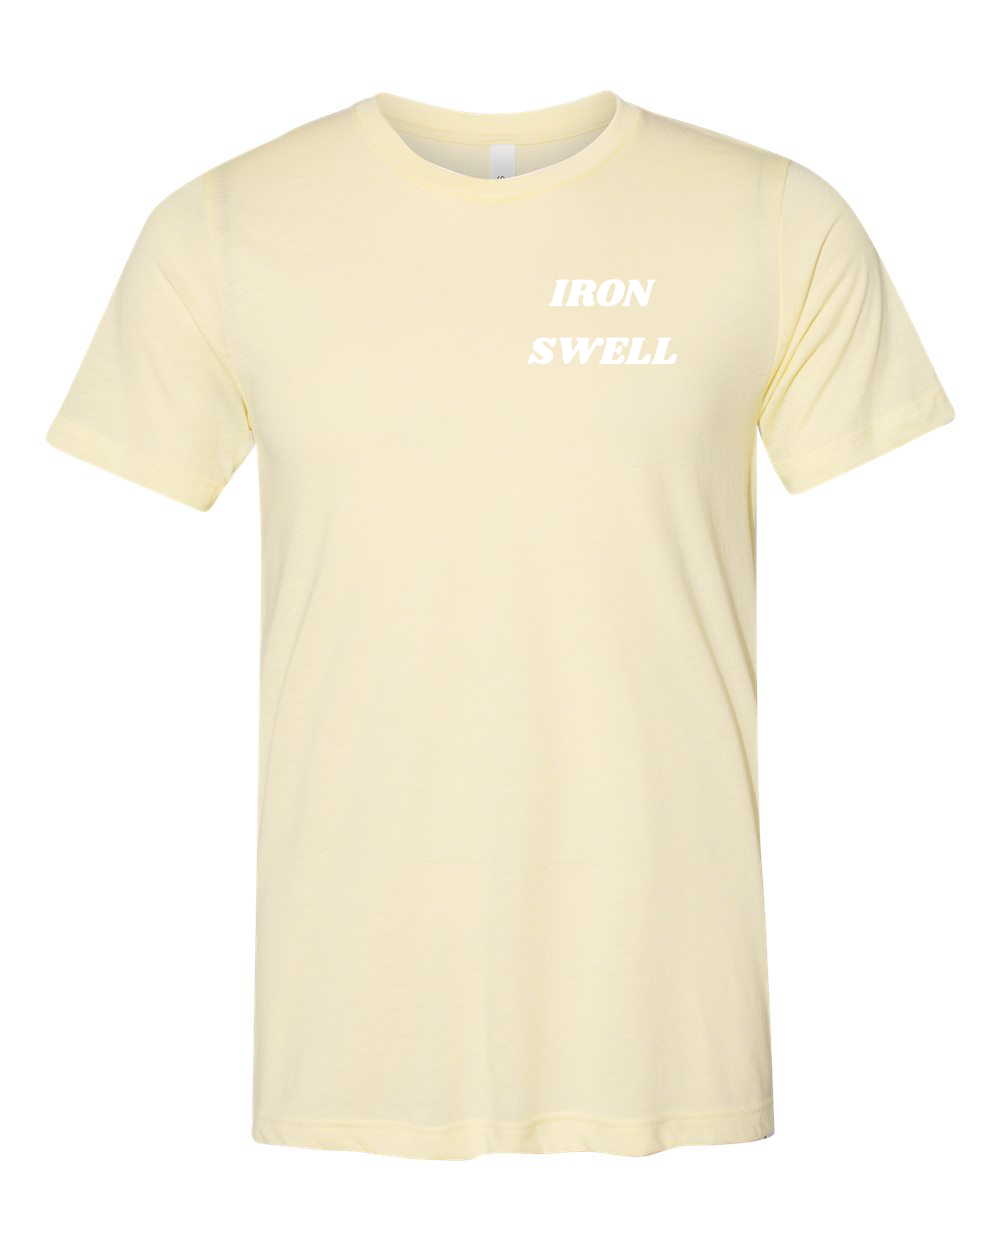 Iron Swell Tee - Pale Yellow